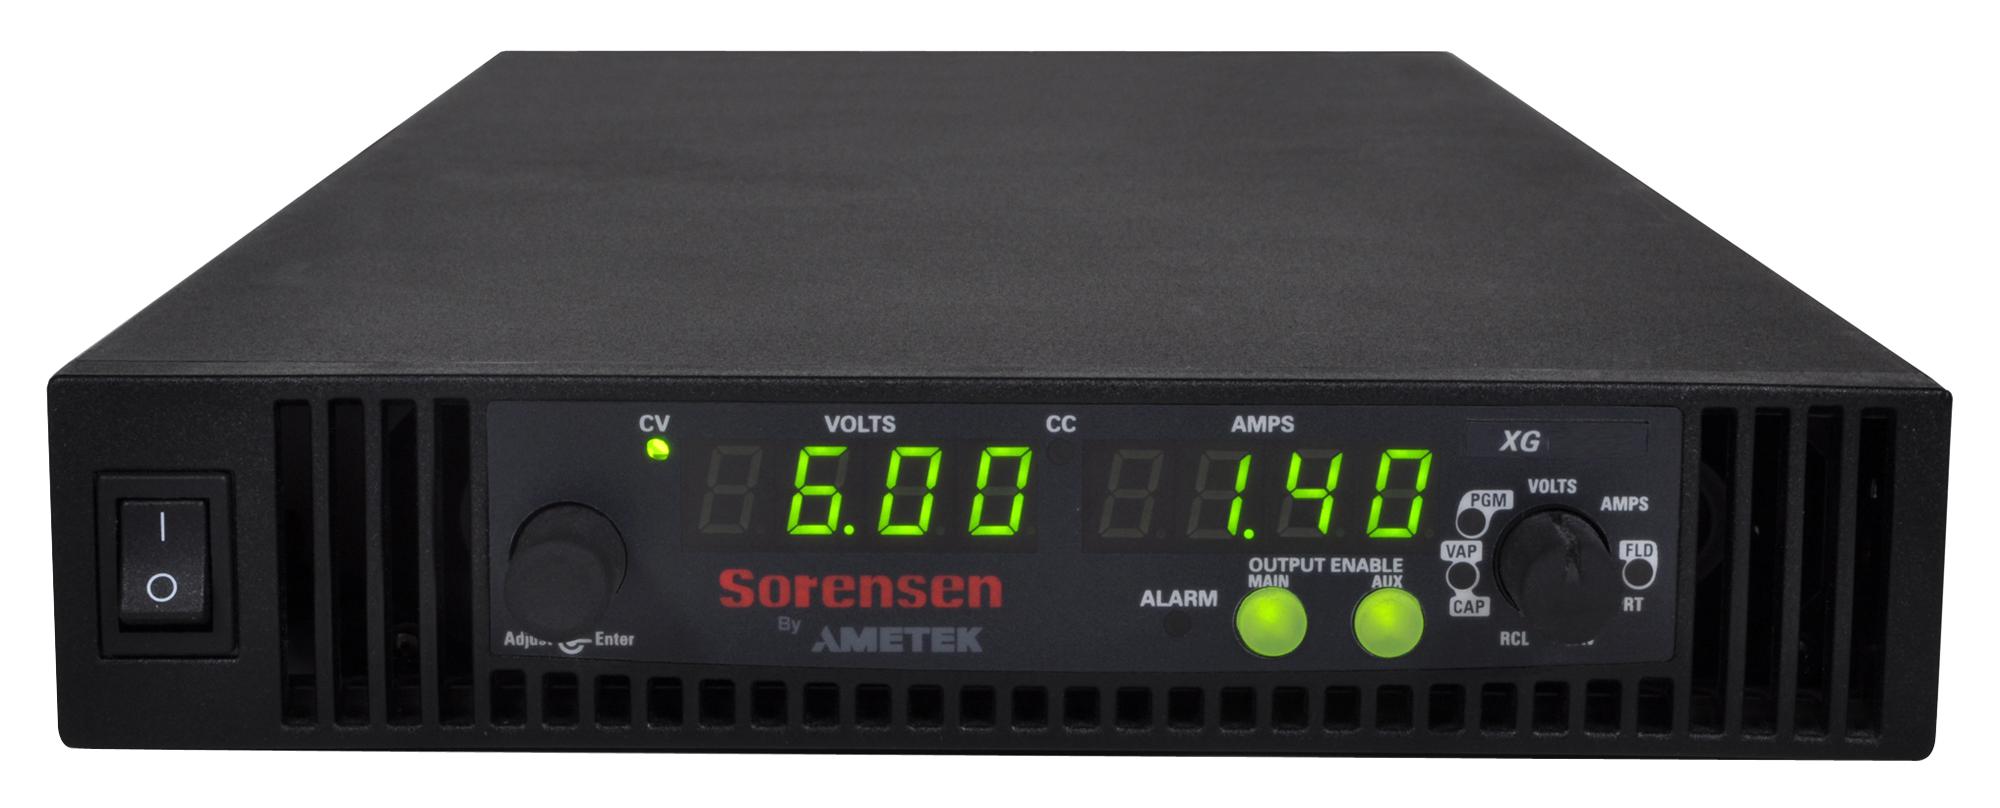 Ametek Programmable Power Xg 8-100R Power Supply, Prog, 100A, 8V, 810W